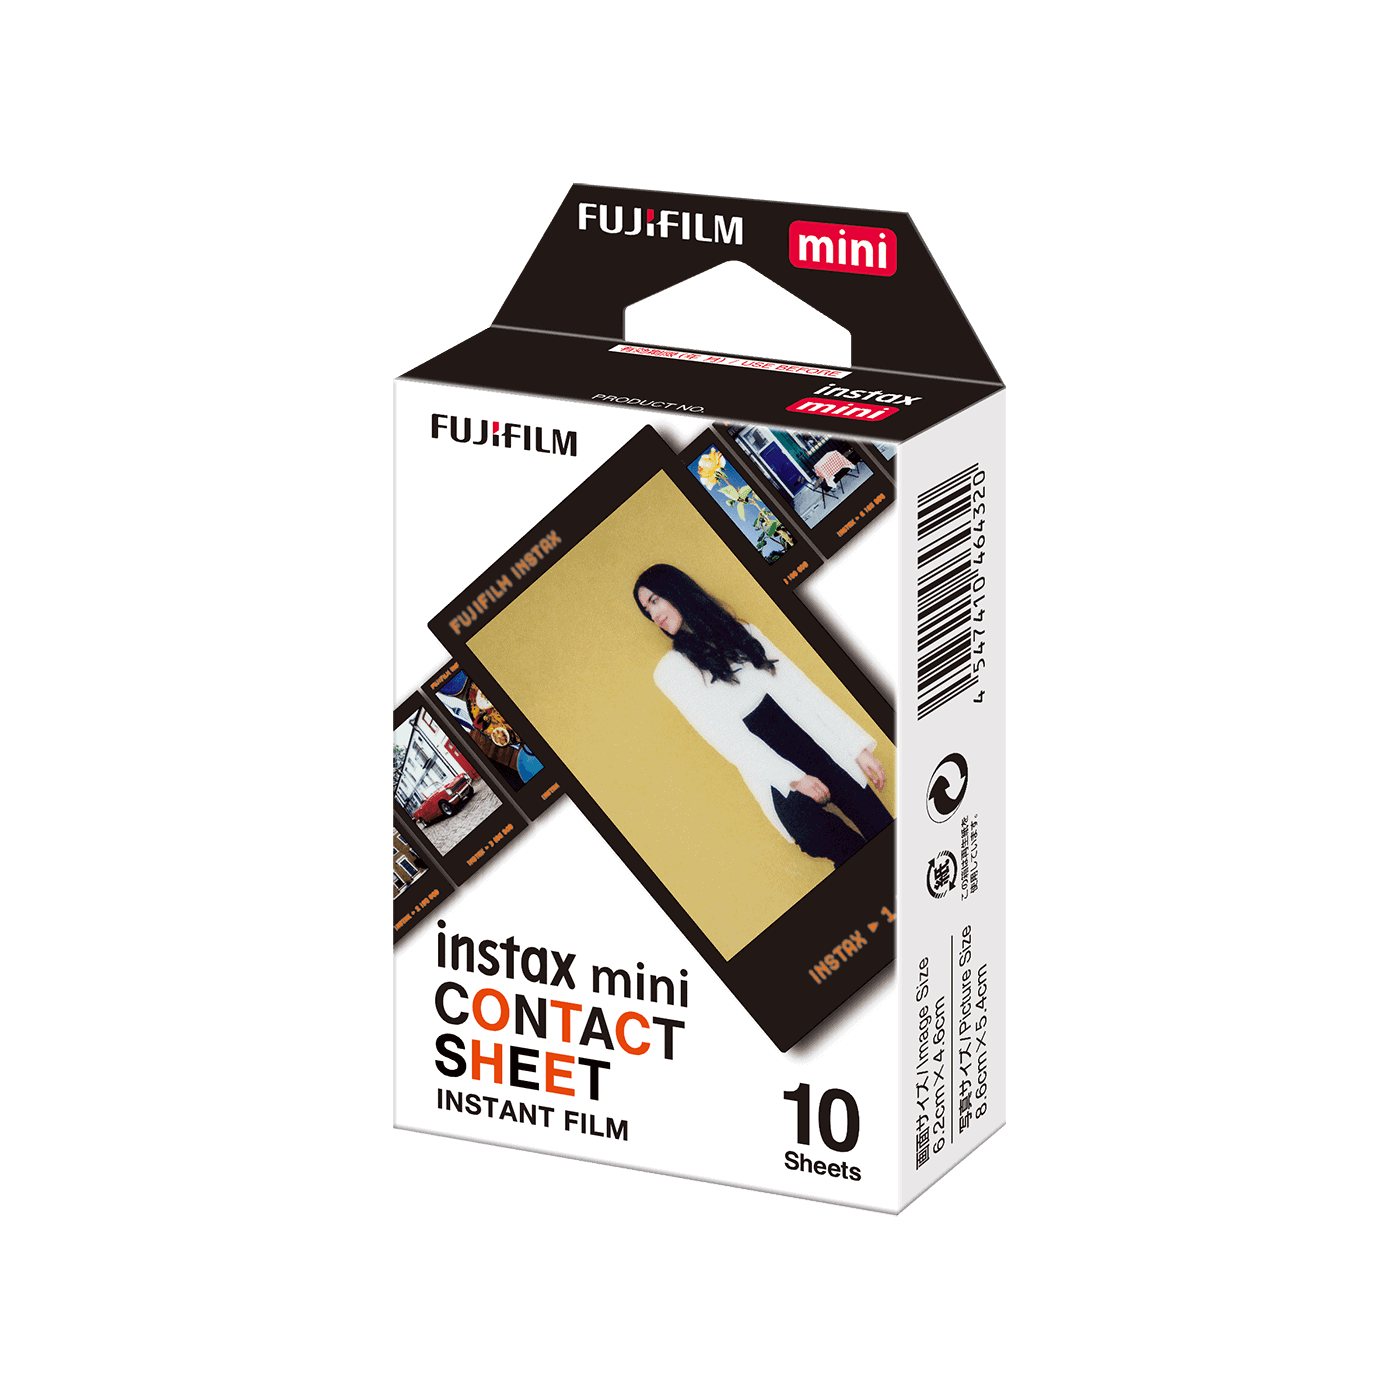 Fujifilm instax mini Instant Film (Contact Sheet)